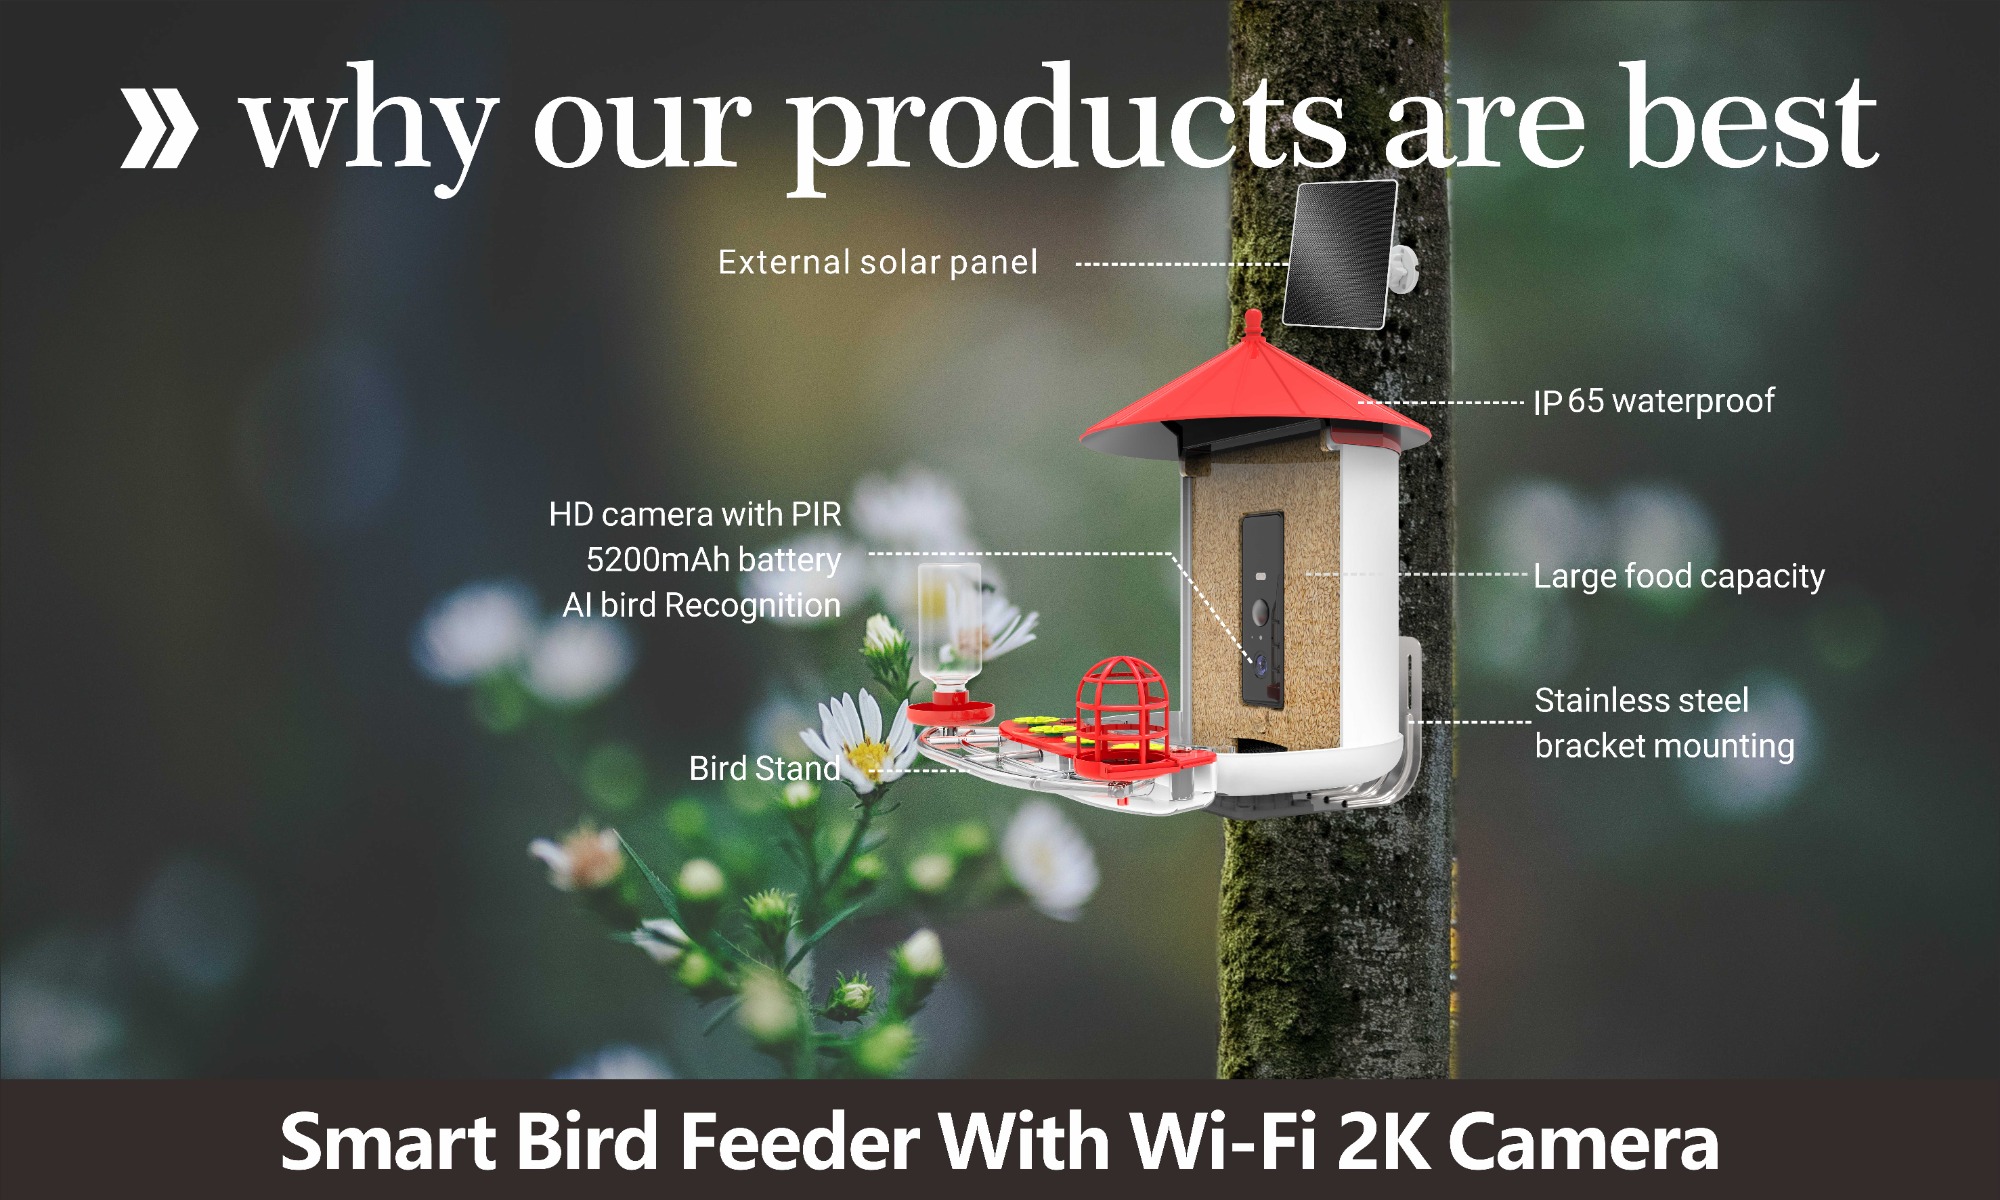 Smart Bird Feeder With Wi-Fi 2K Camera